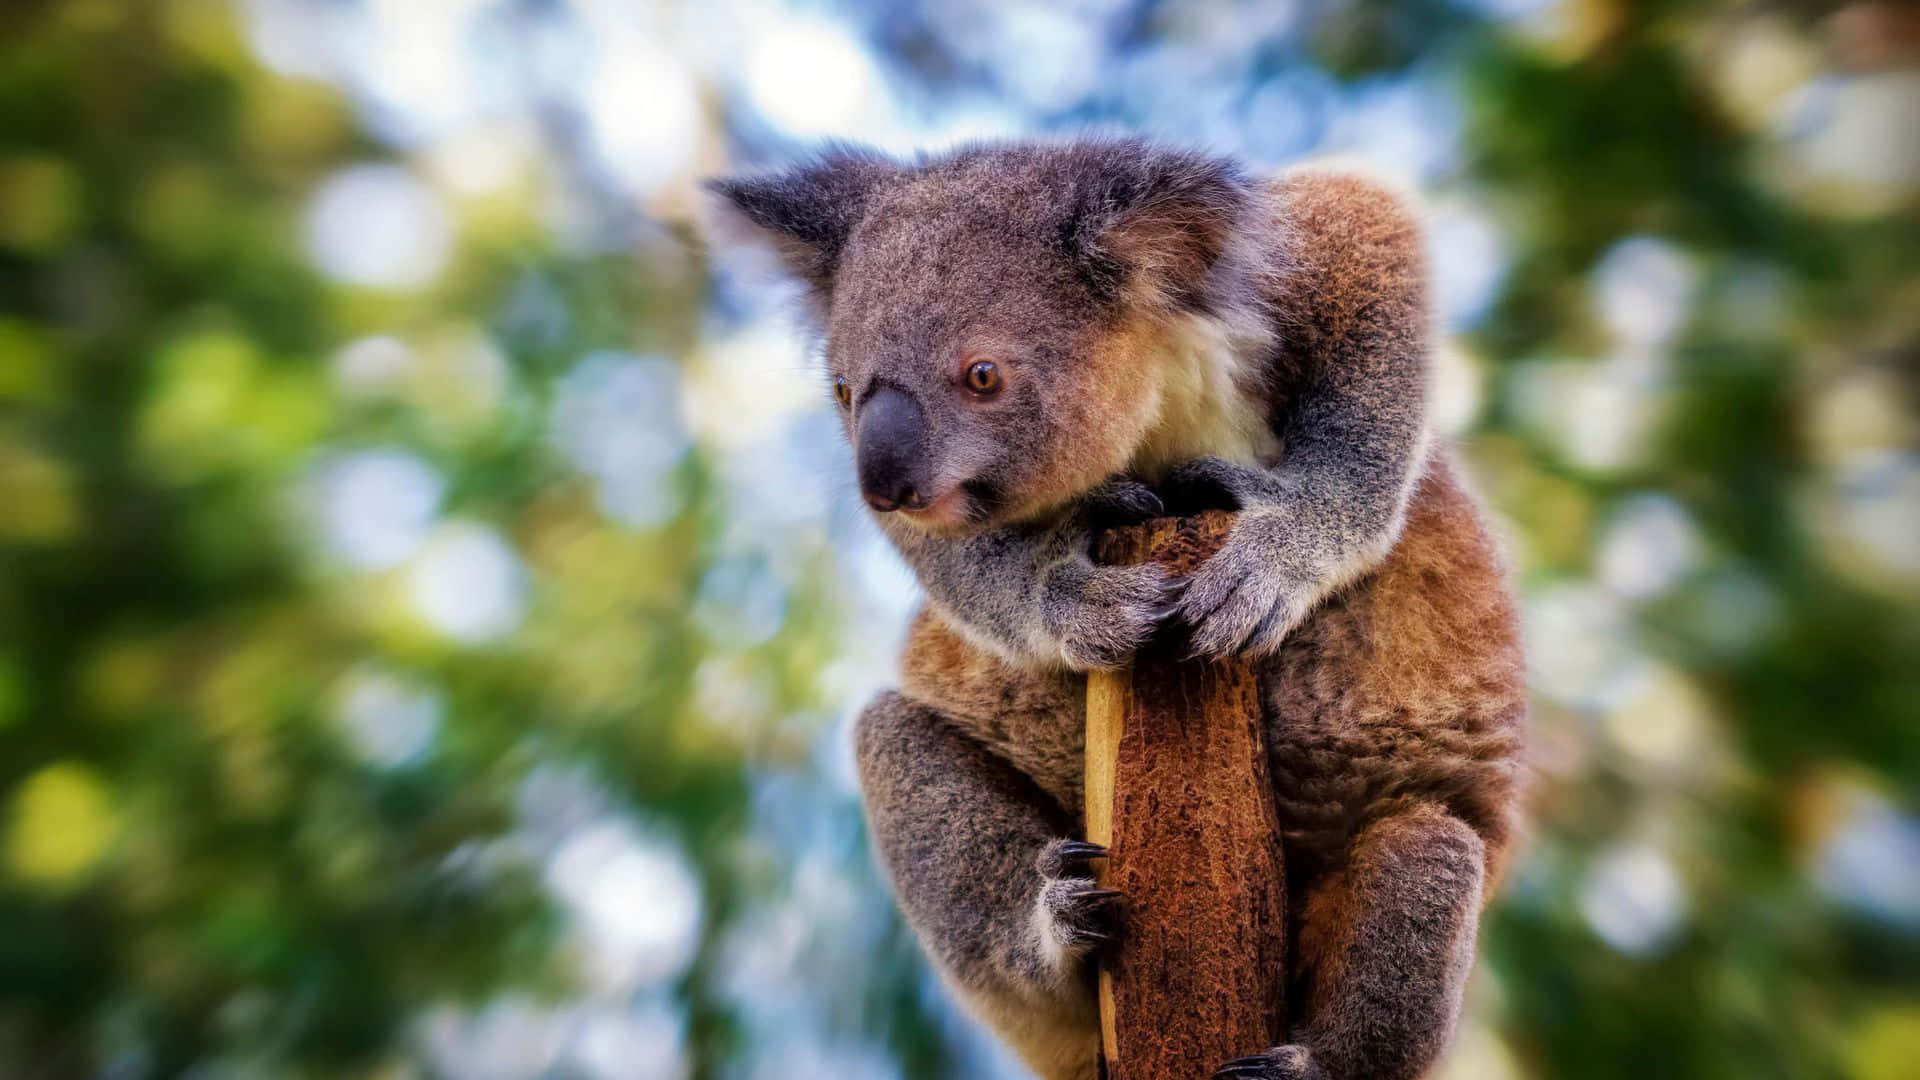 A peaceful moment between a Koala and its caretaker